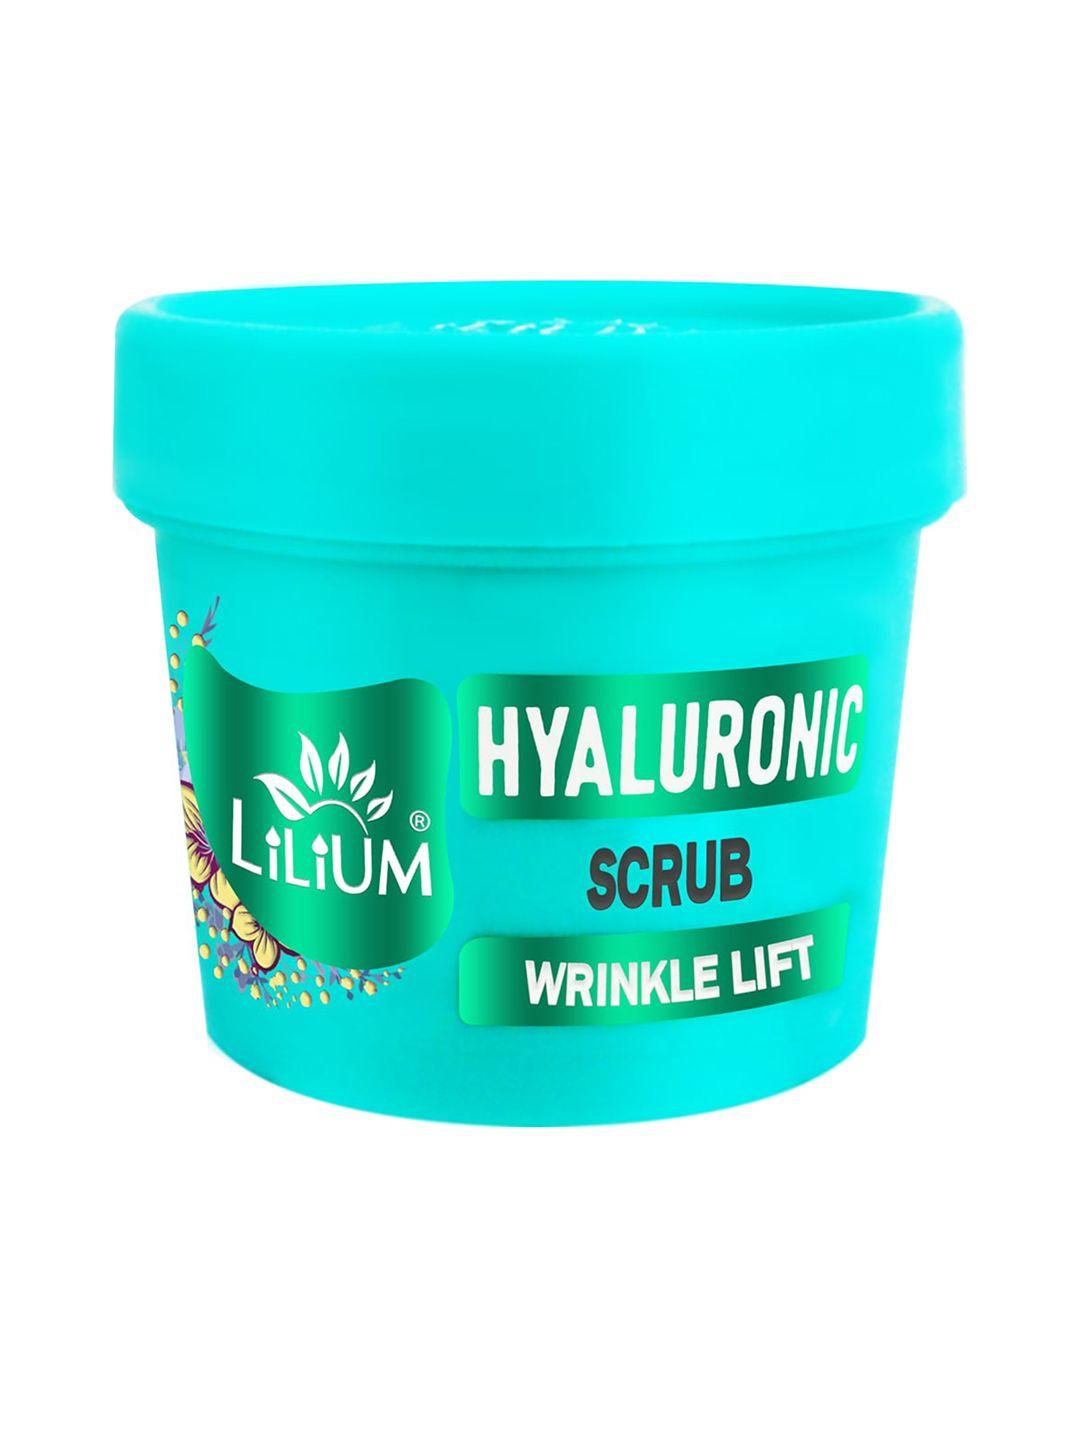 lilium hyaluronic scrub for wrinkle lift  - 100g